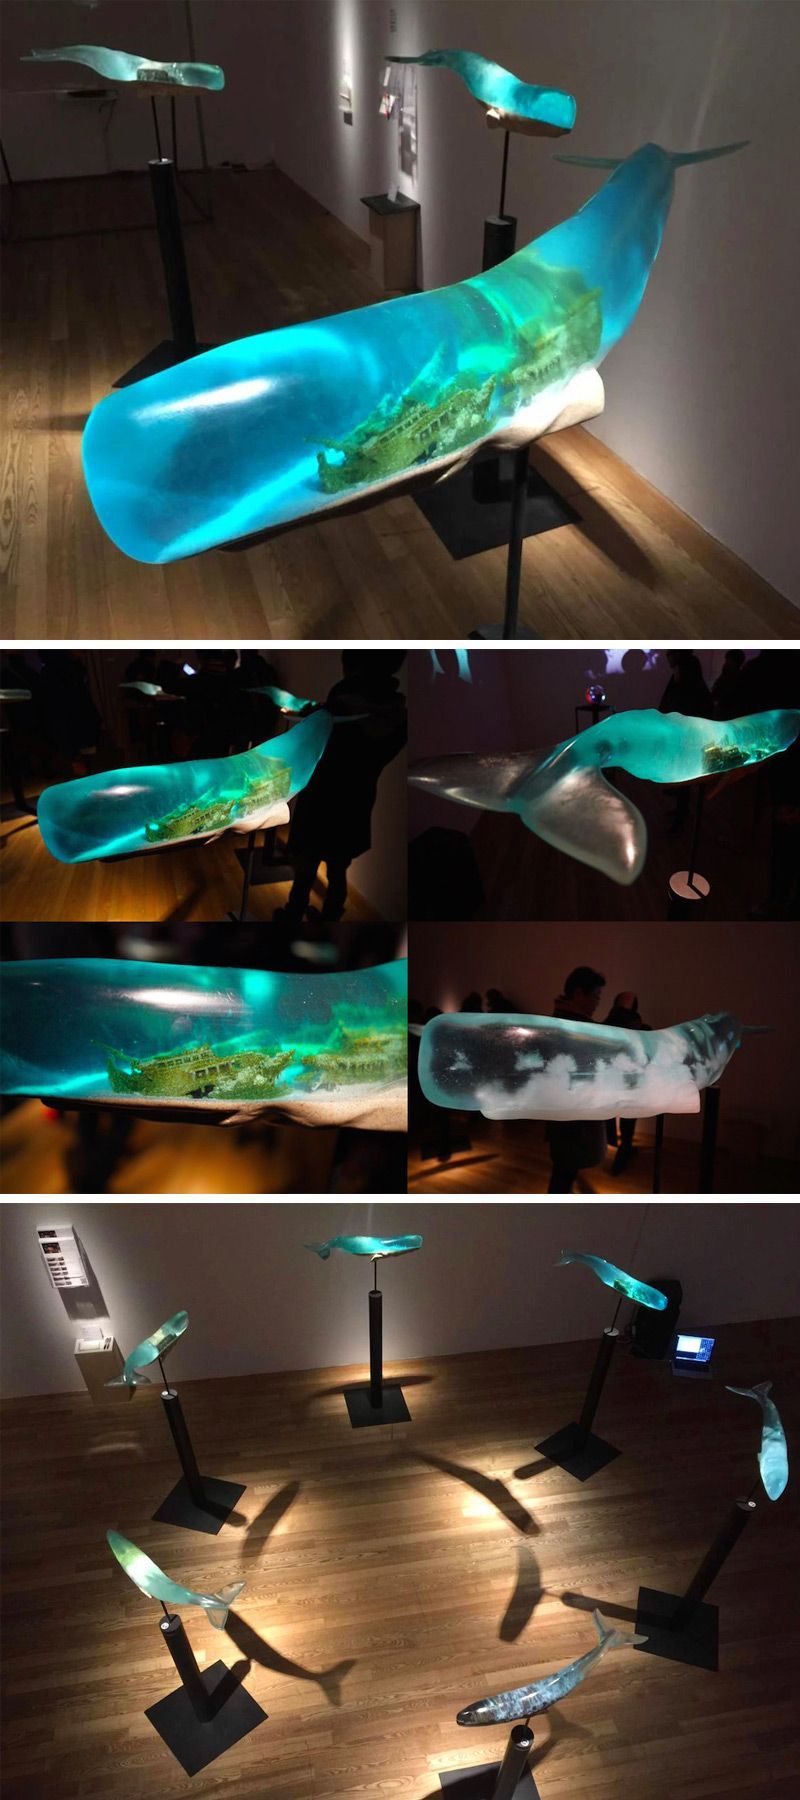 Shipwrecks and Deep Ocean Scenes Encapsulated Inside Translucent Whale Sculptures